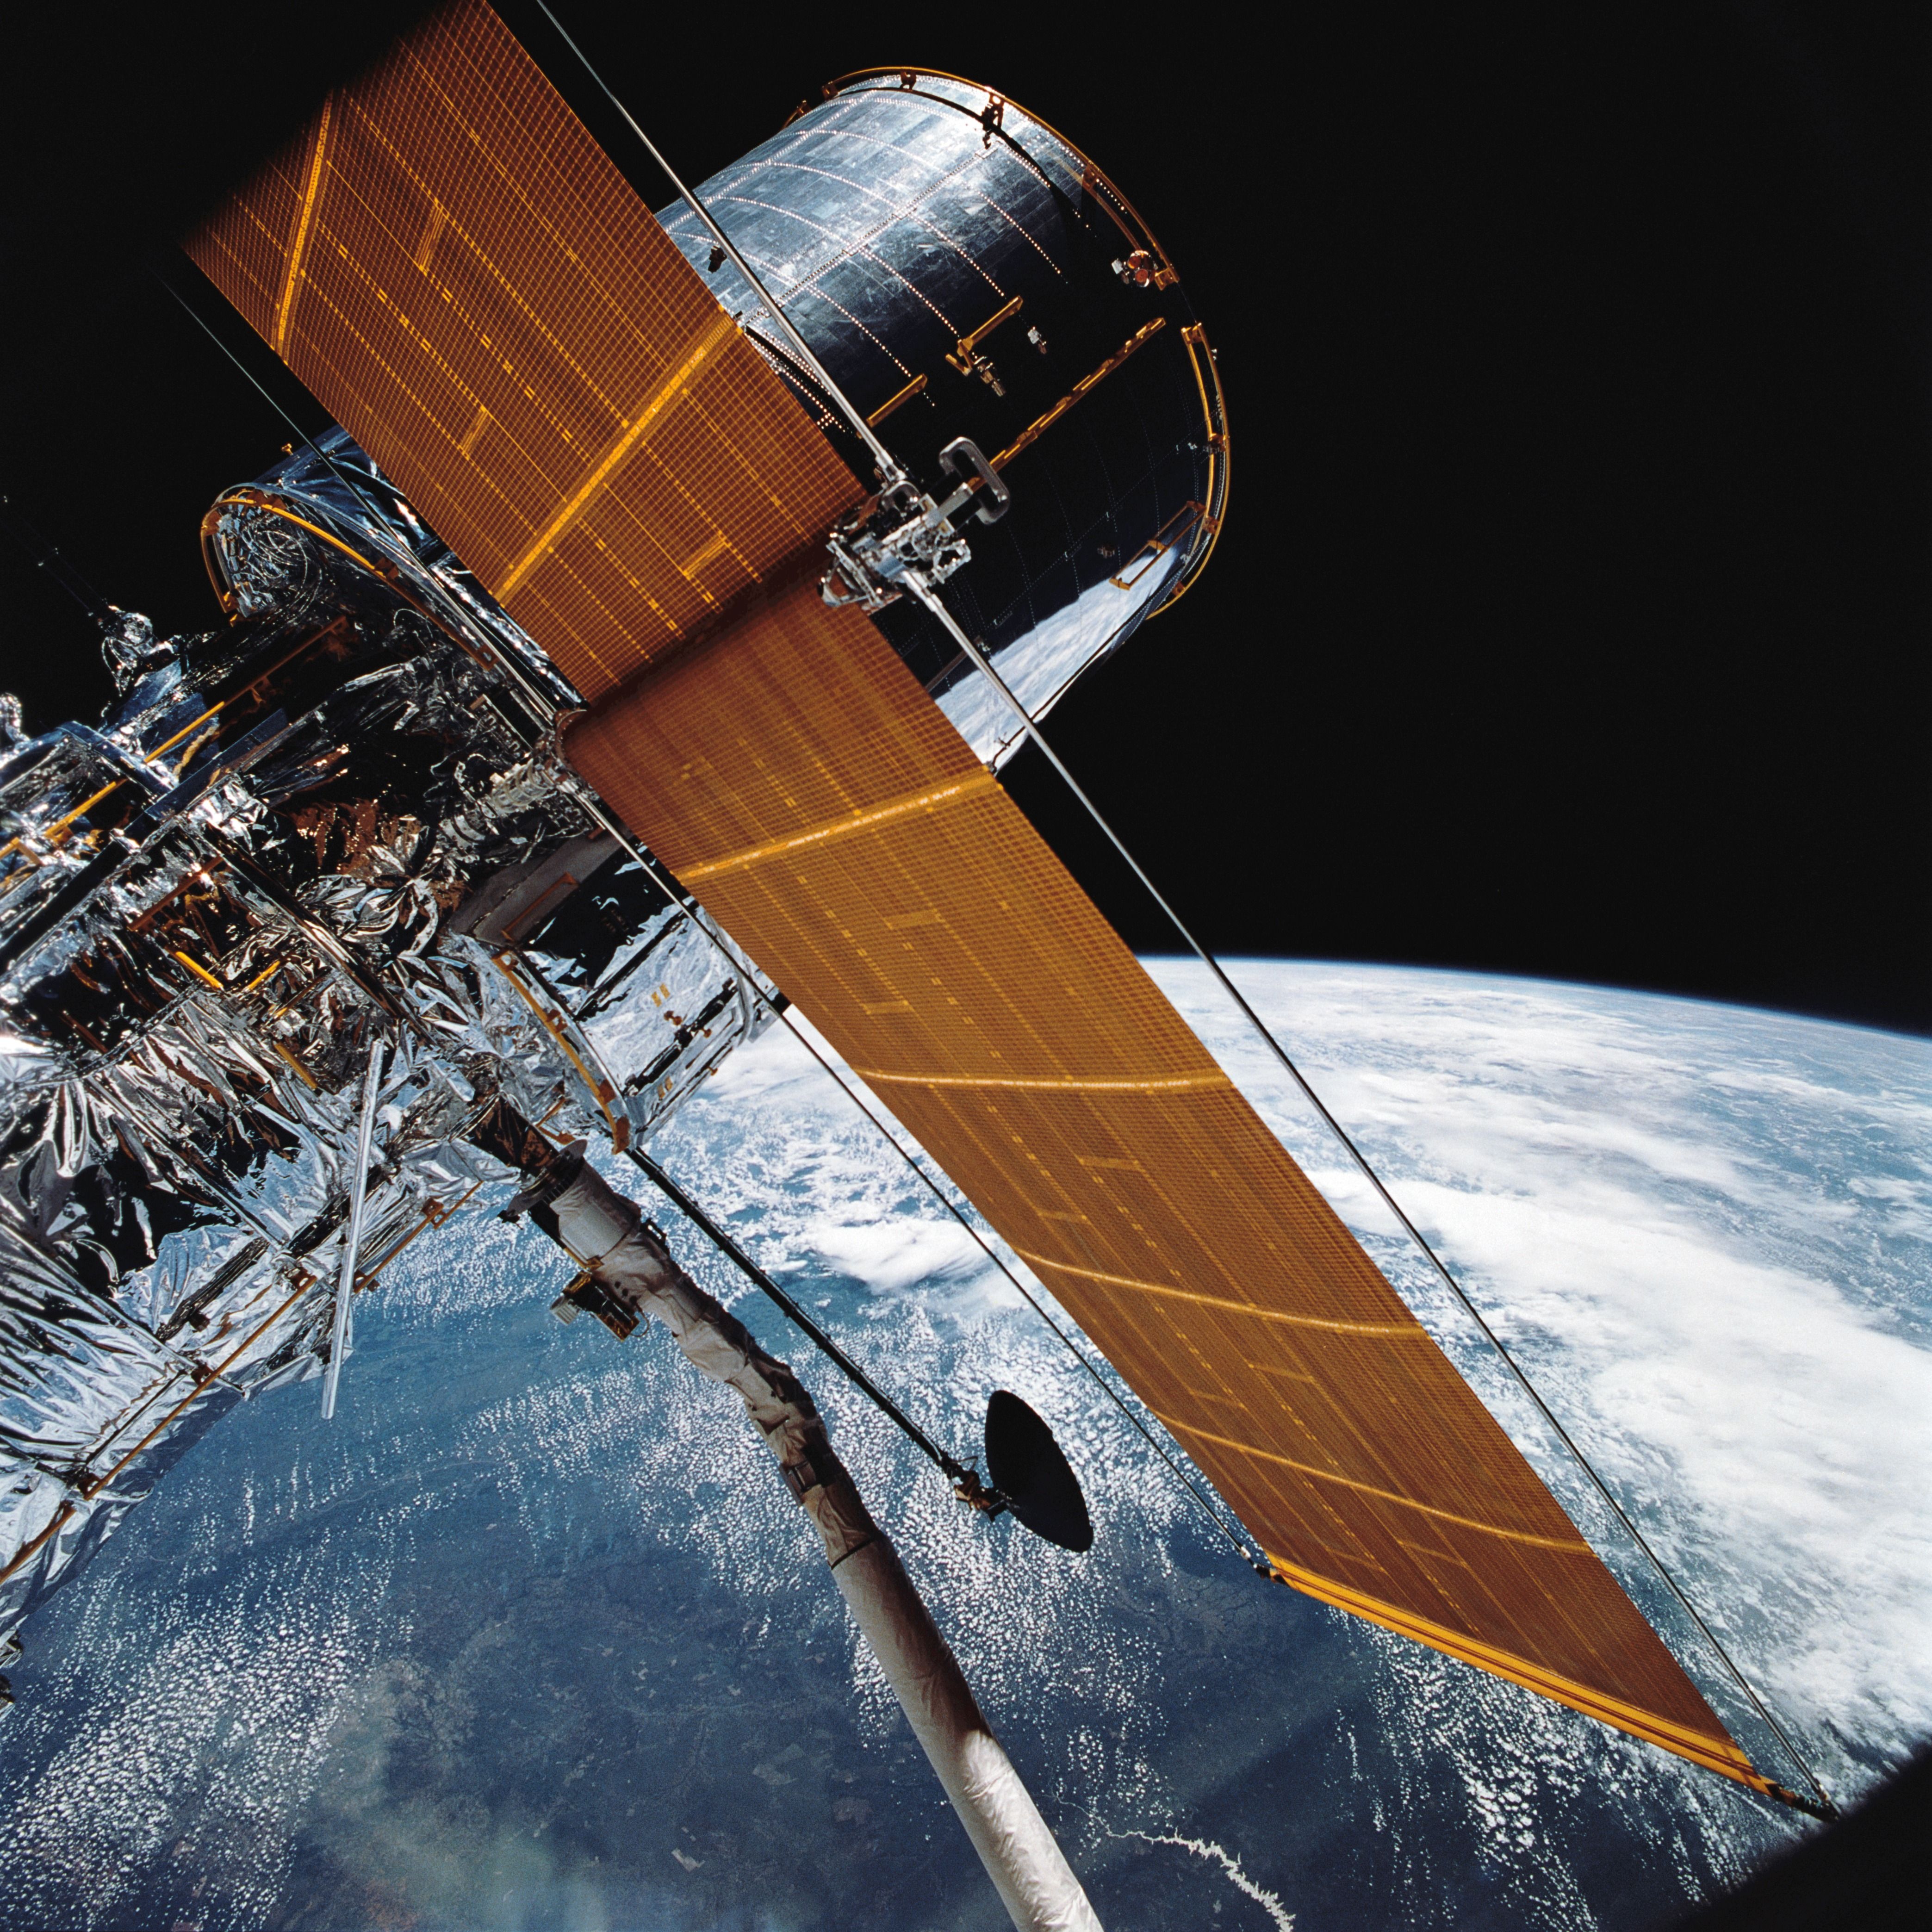 Hubble Space Telescope Reaches Orbit | Hubble space telescope, Space ...